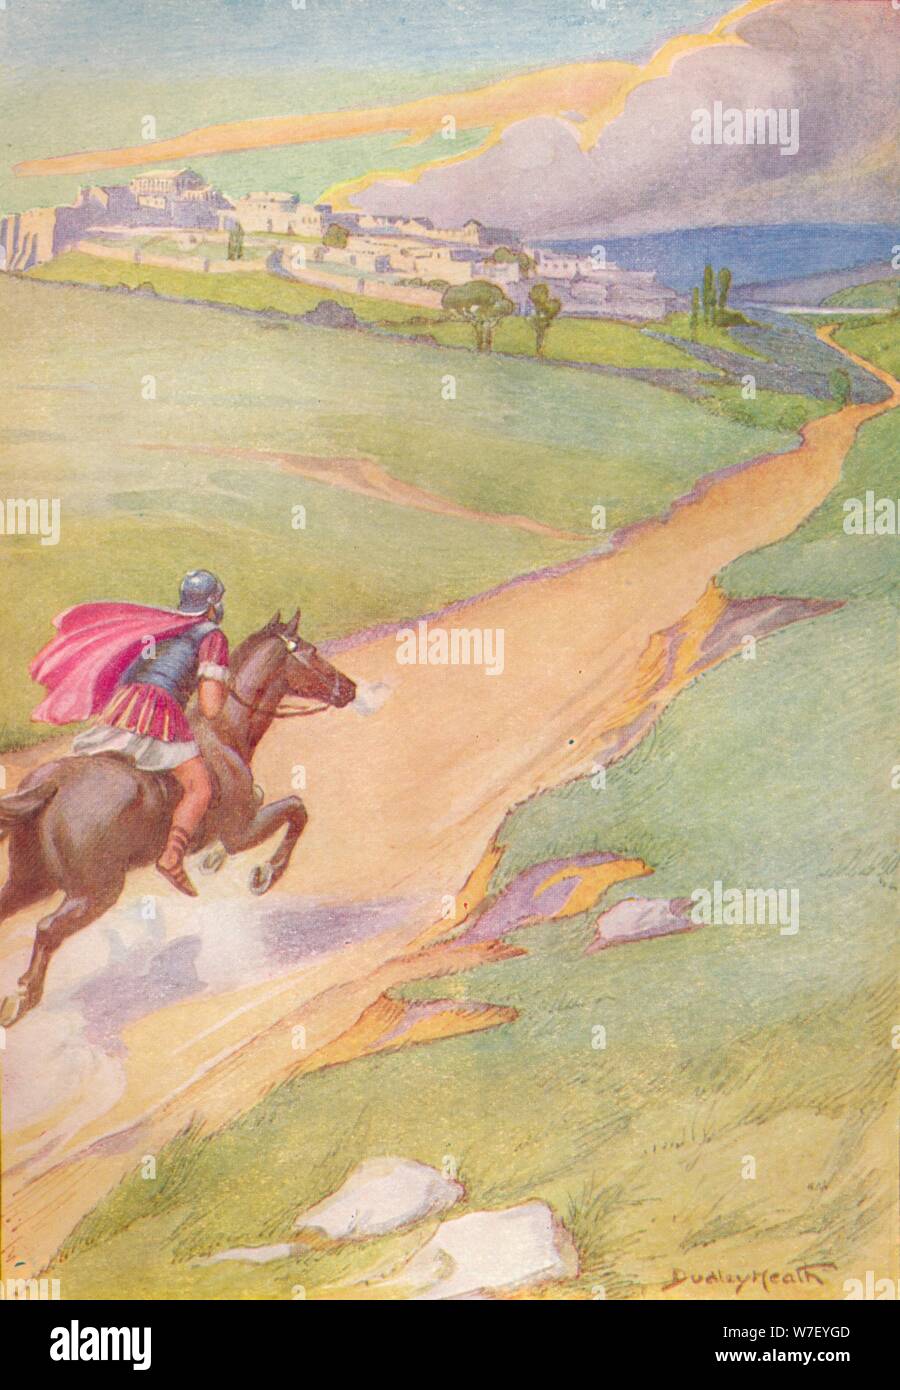 'A messenger was seen spurring his horse toward the city', c1912 (1912). Artist: Ernest Dudley Heath. Stock Photo